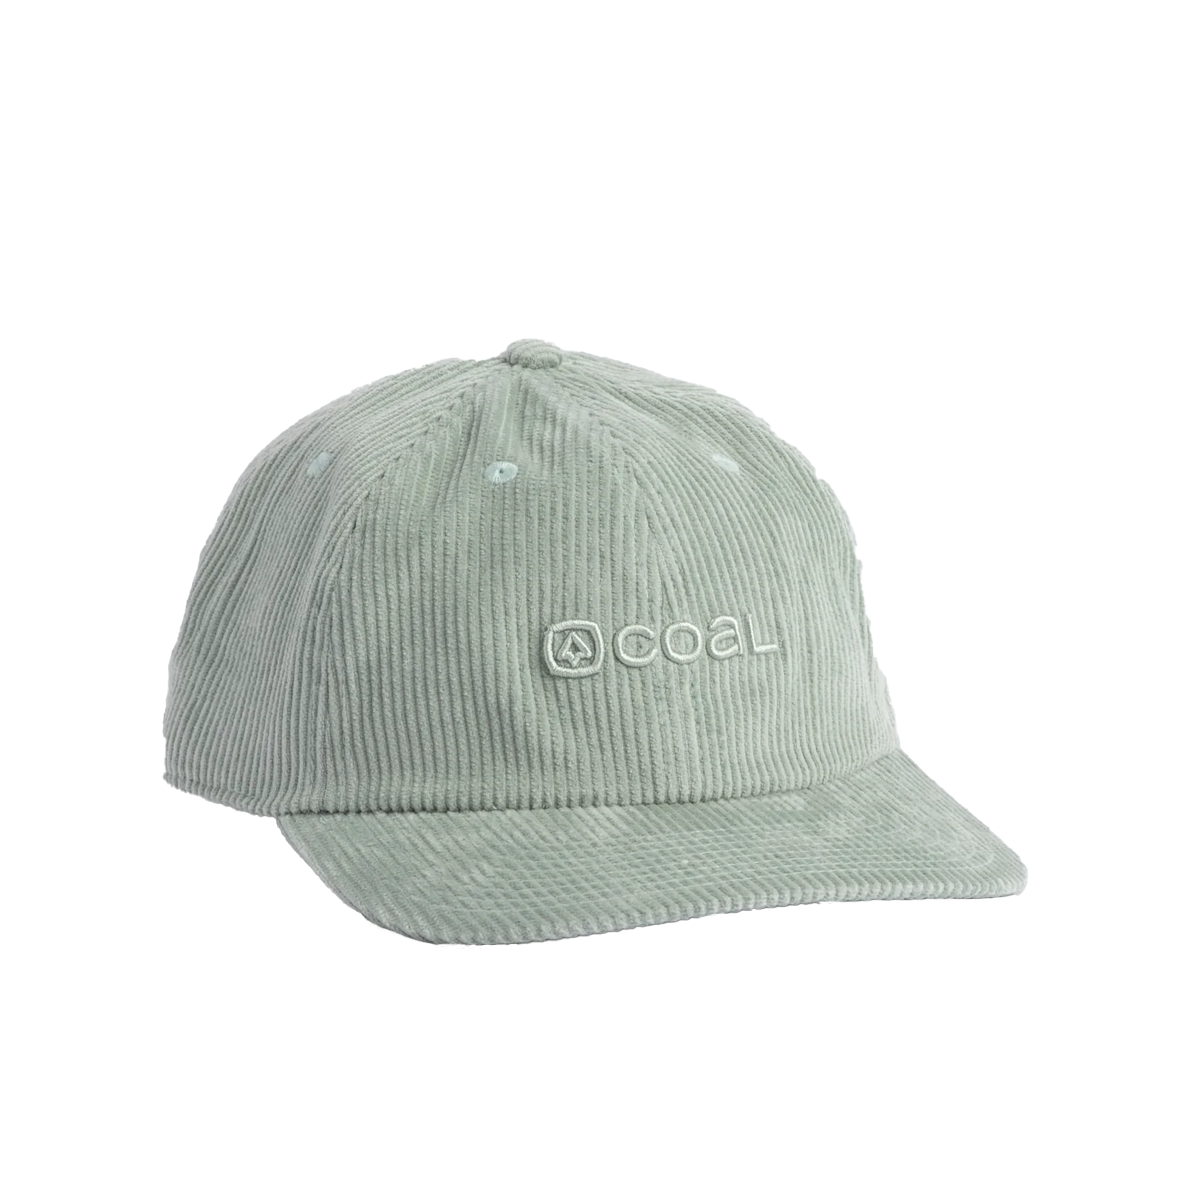 Coal Encore Hat - Assorted Colors